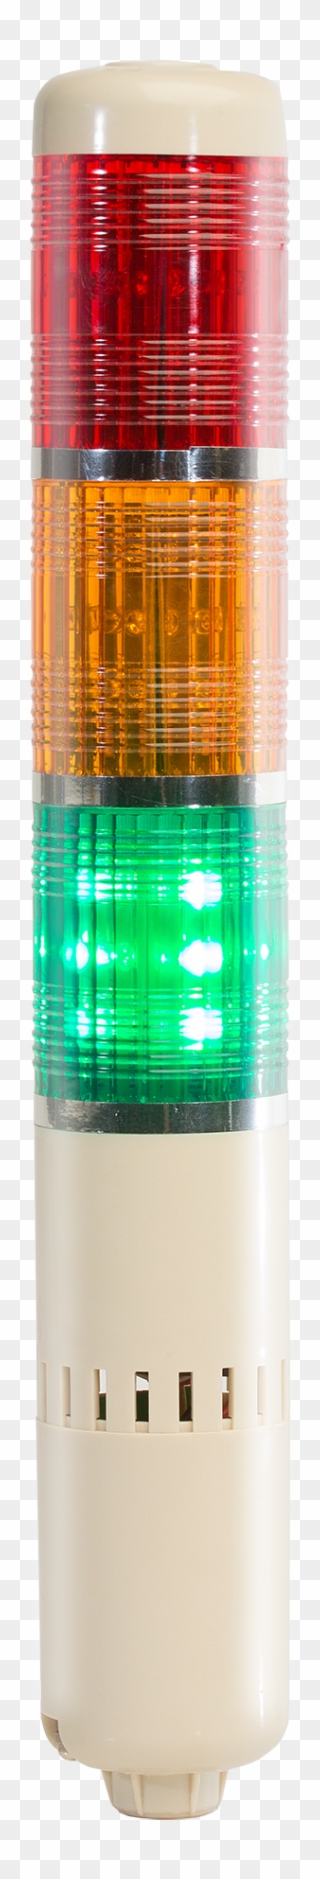 Traffic Light Logico2 - Fluorescent Lamp Clipart